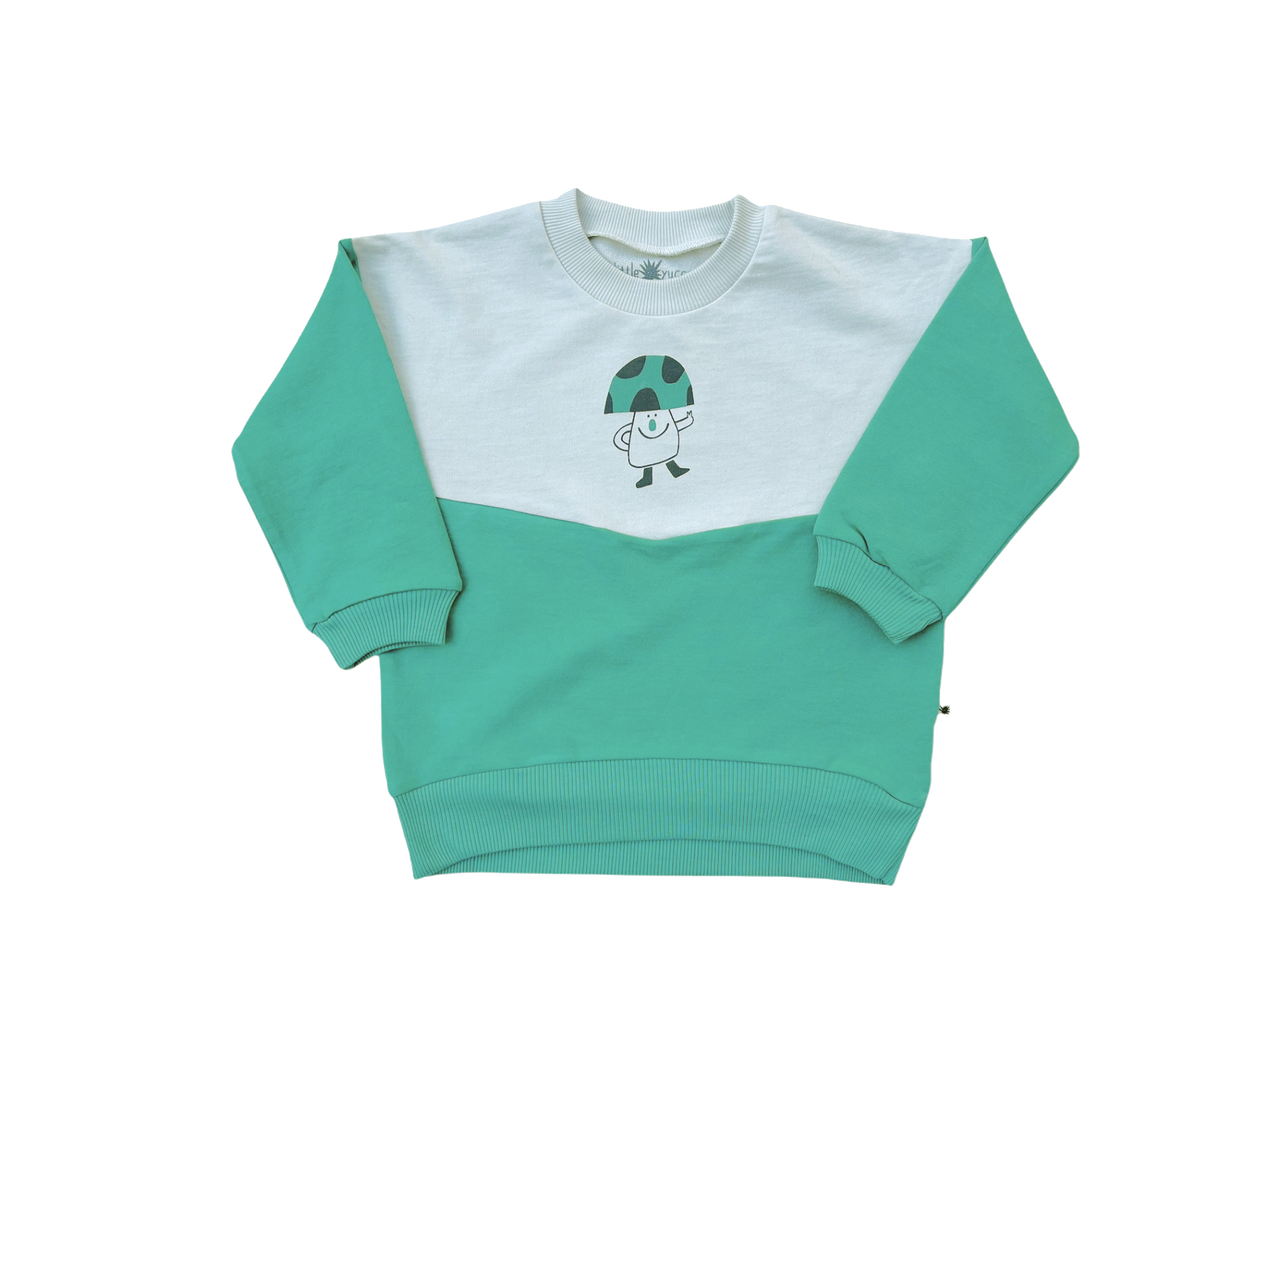 "Grow" Sweatshirt - Multi Green